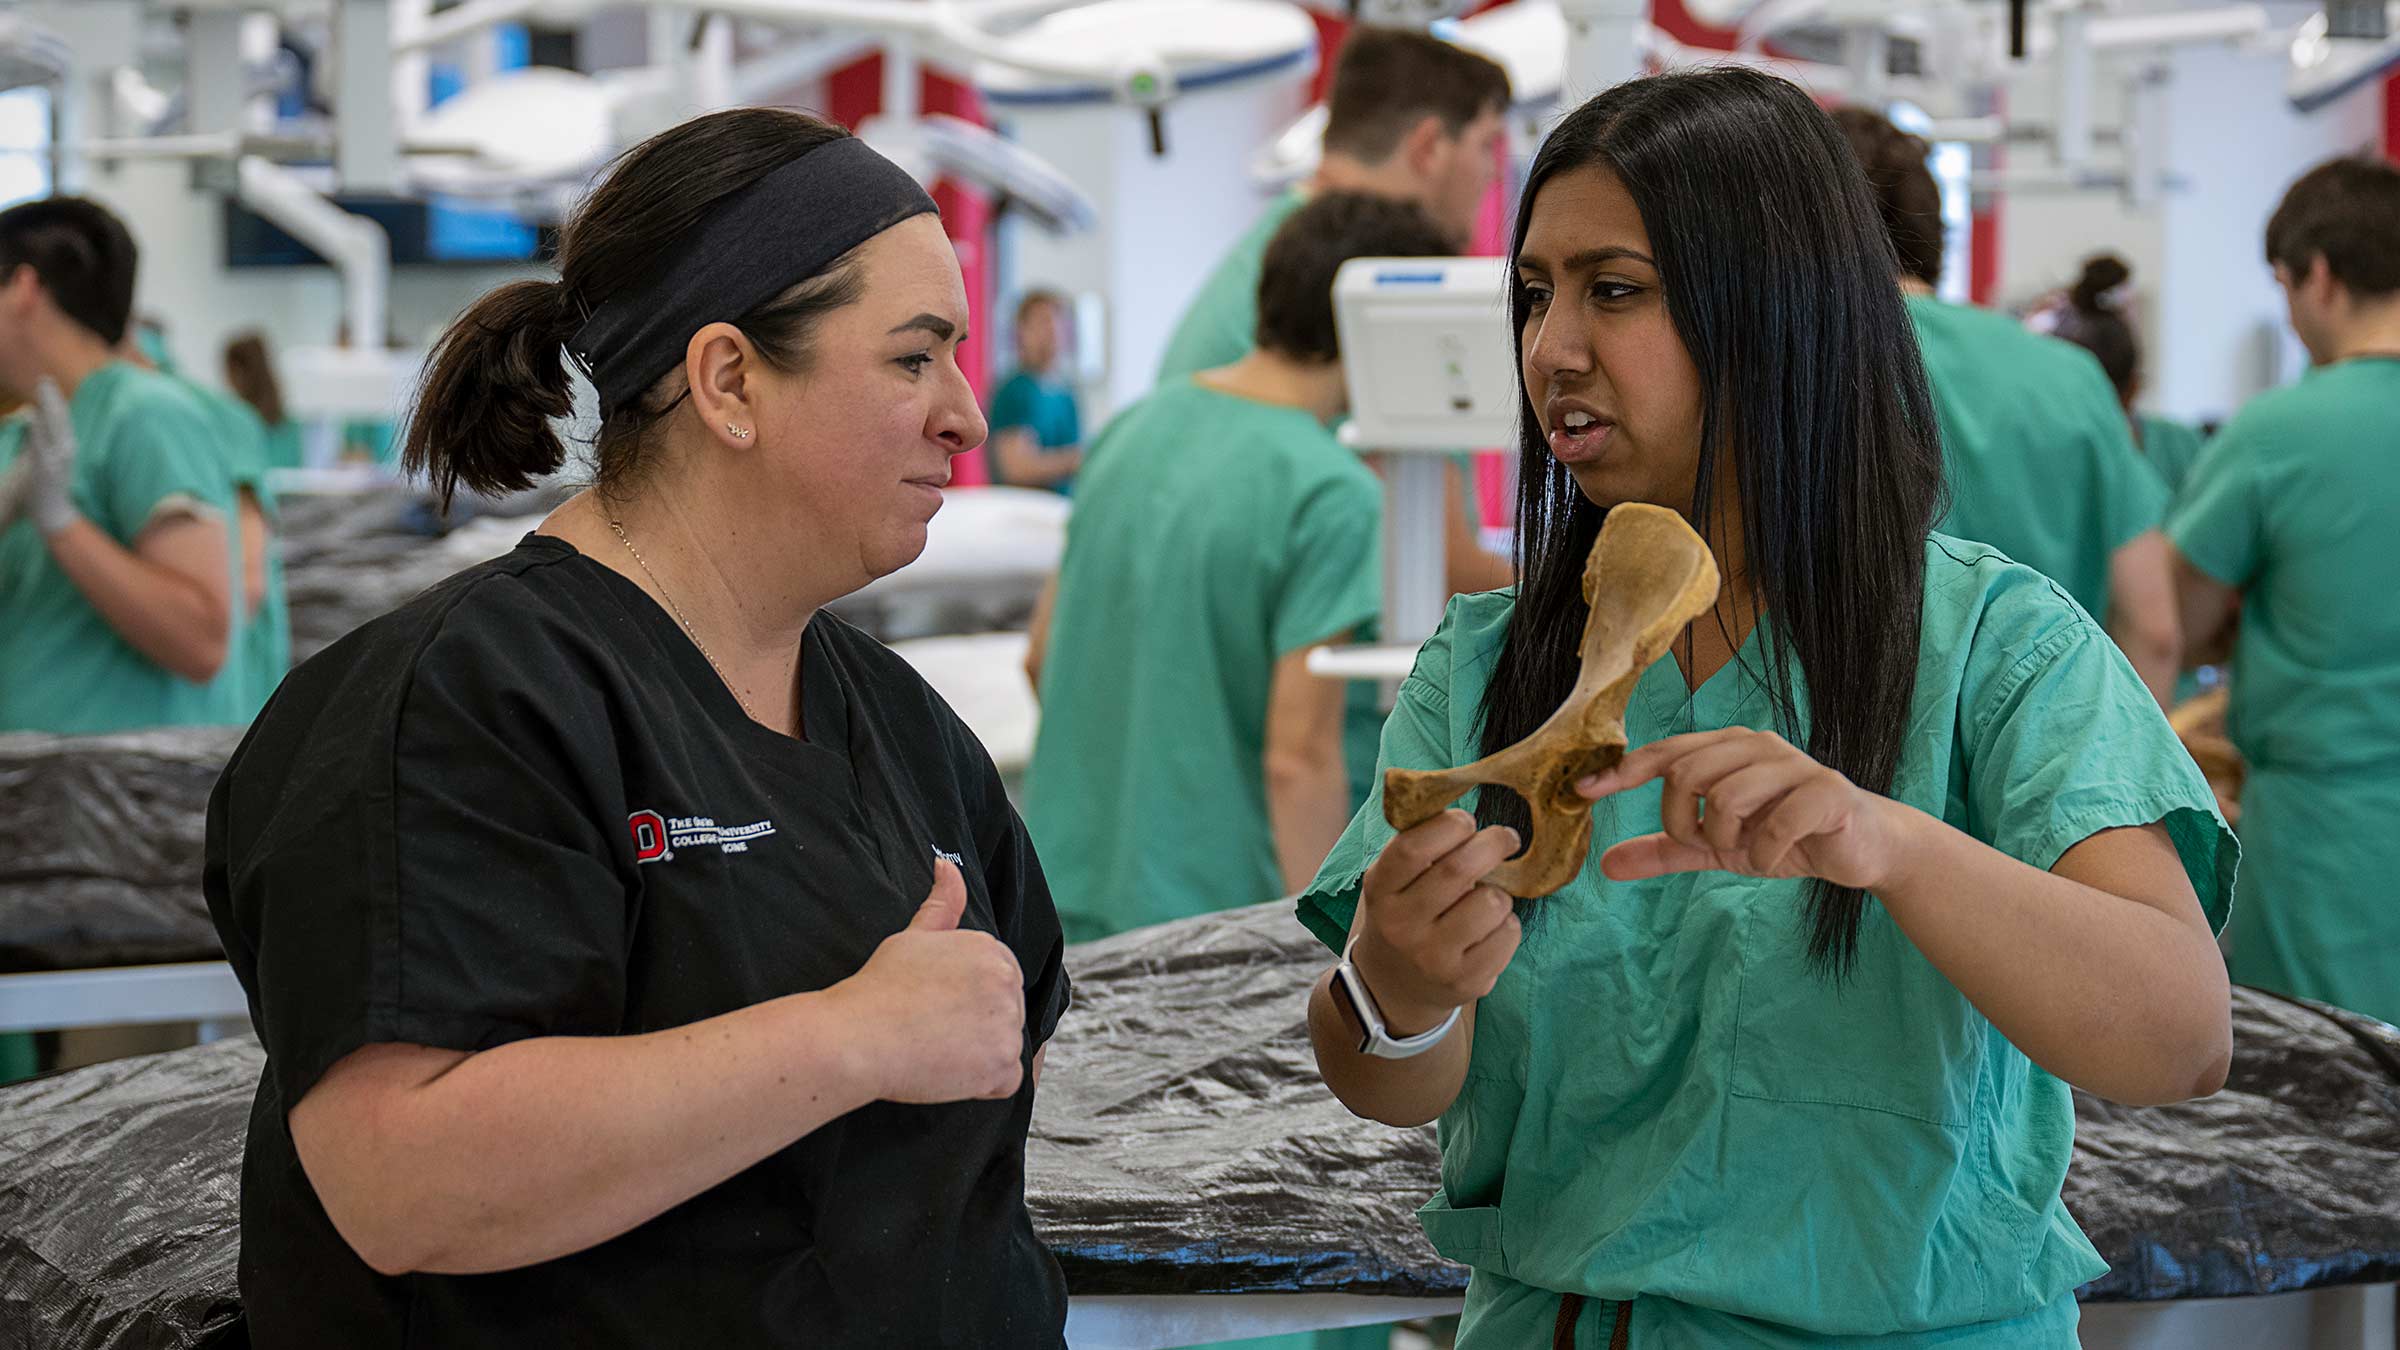 Ohio State medical student Varshita Chirumamilla asks her anatomy professor a question